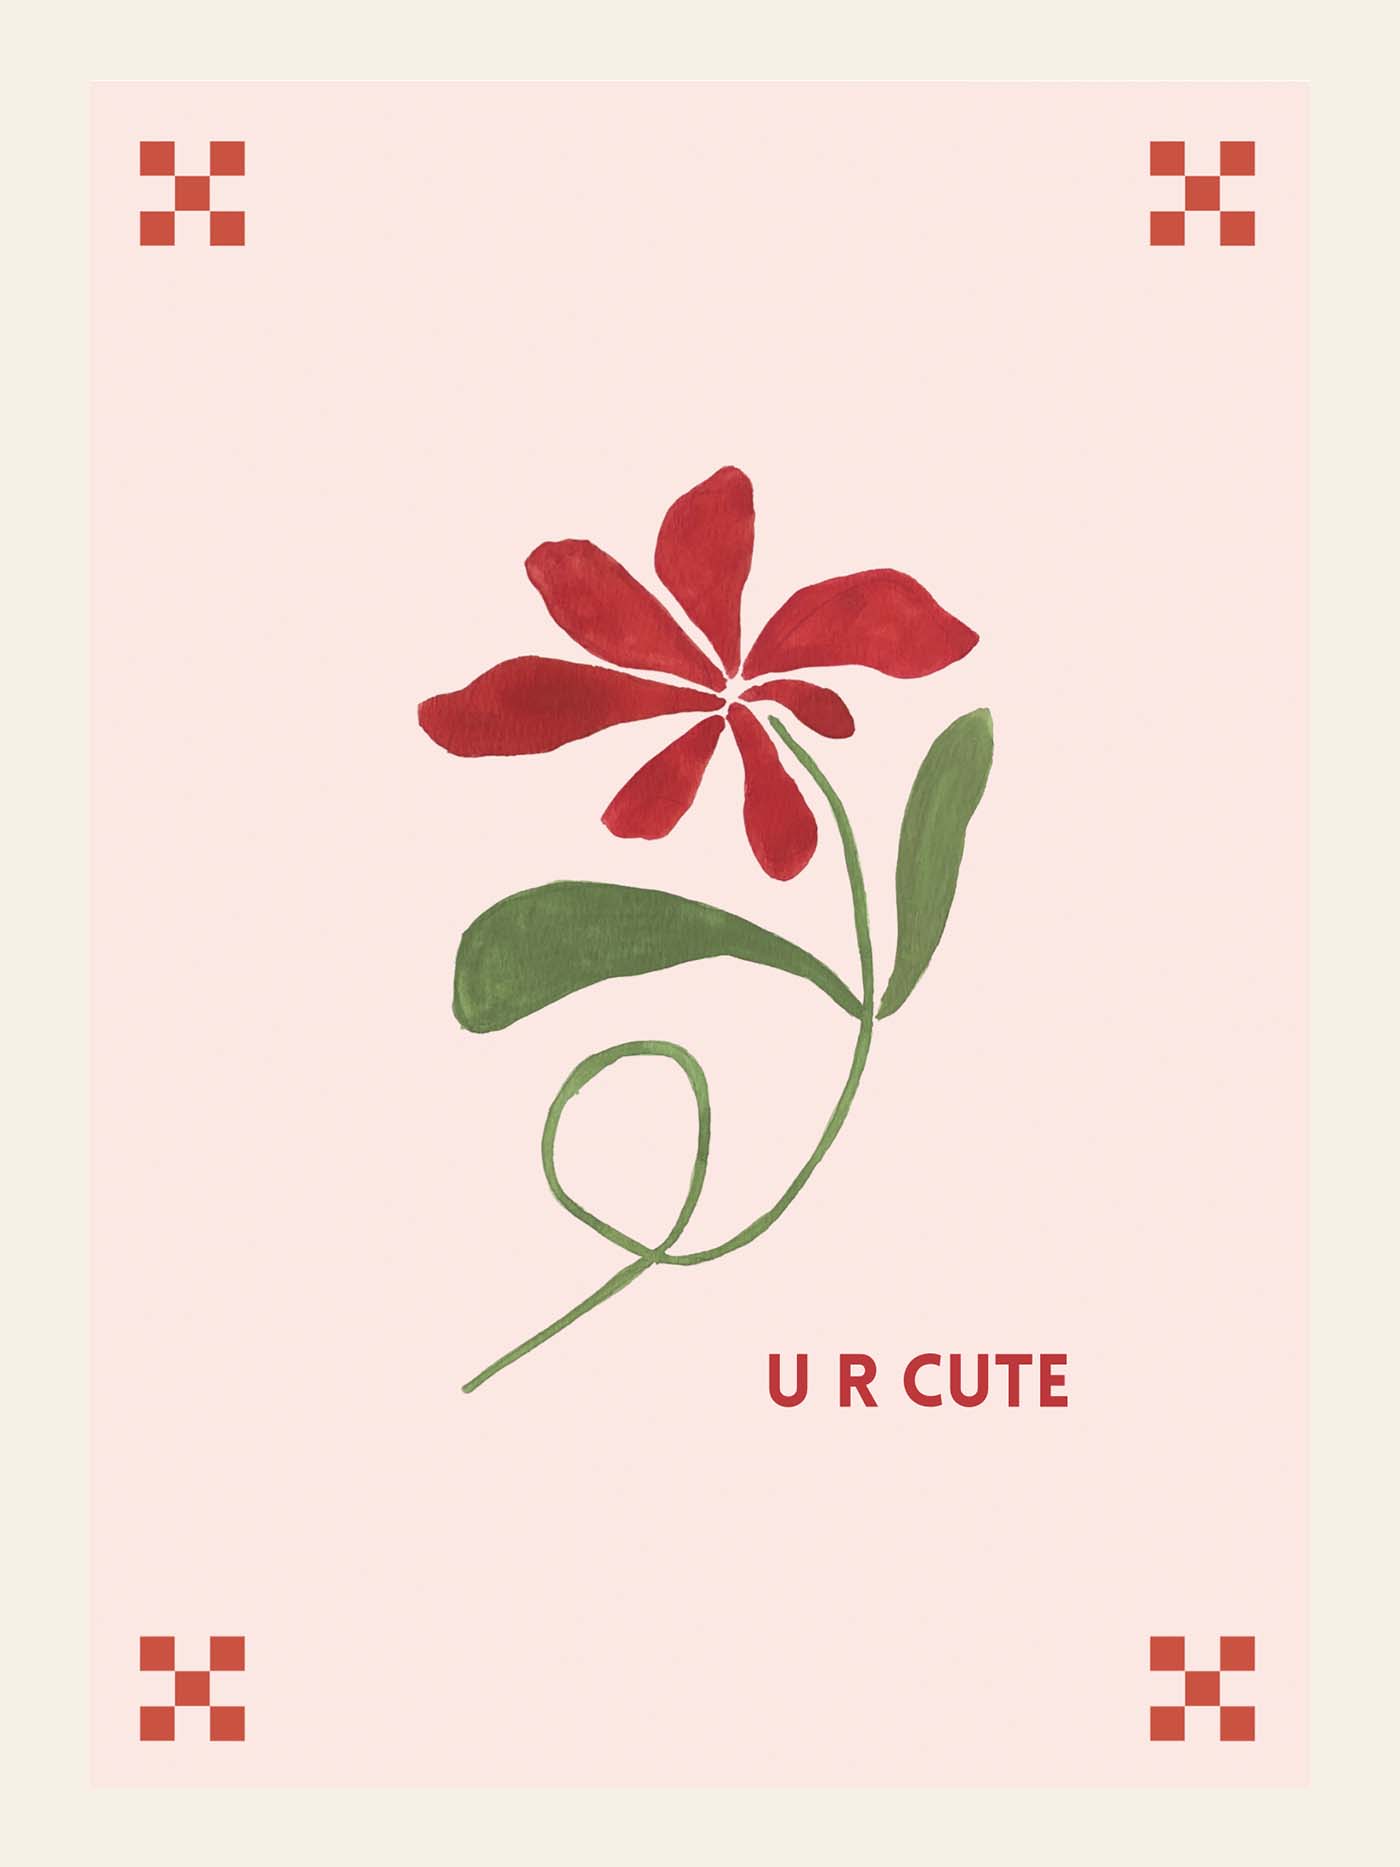 Best Bud's U R CUTE Greeting Card